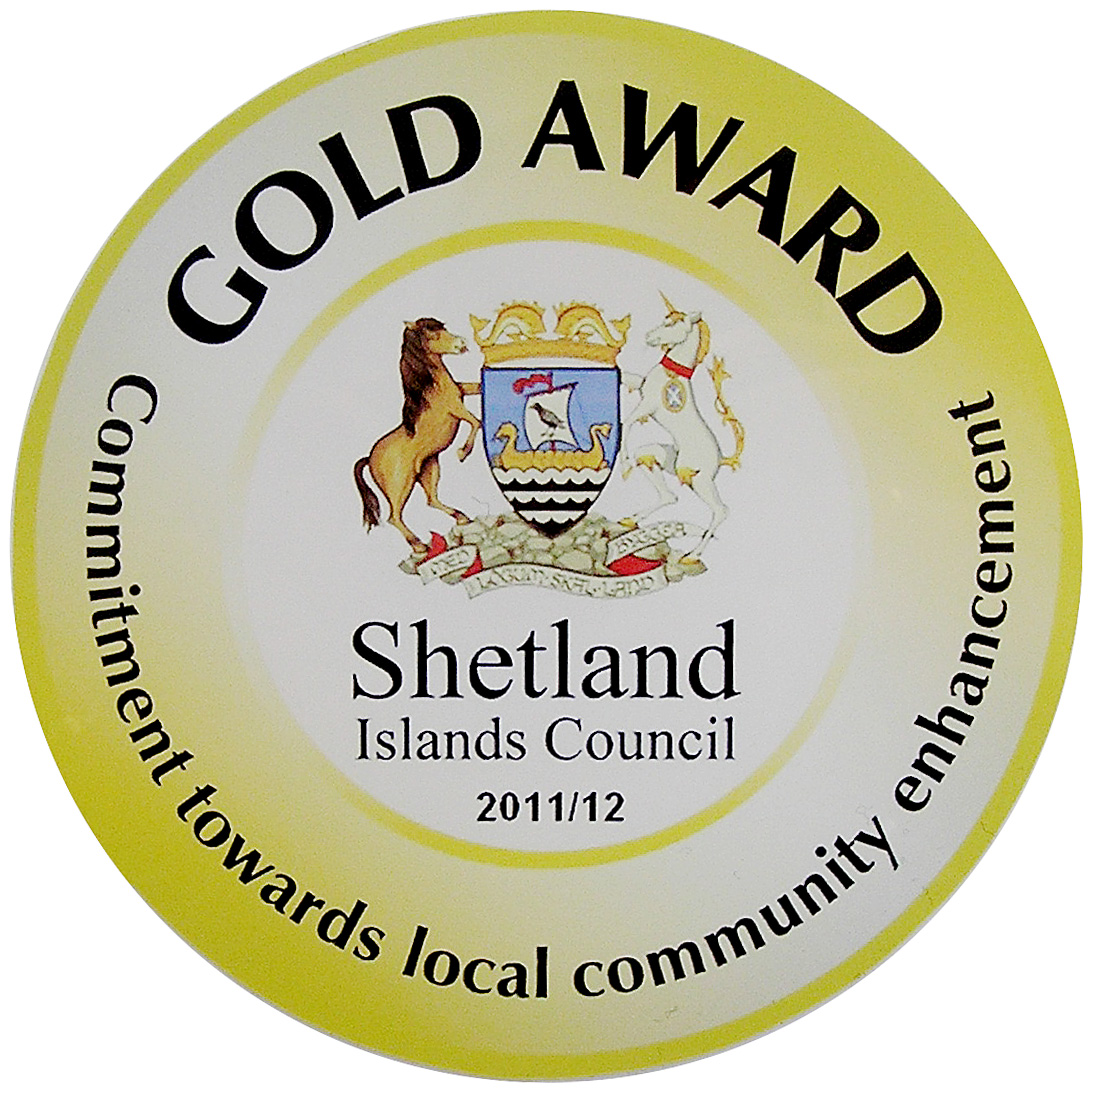 Shetland Islands Council - Gold Award 2011/12